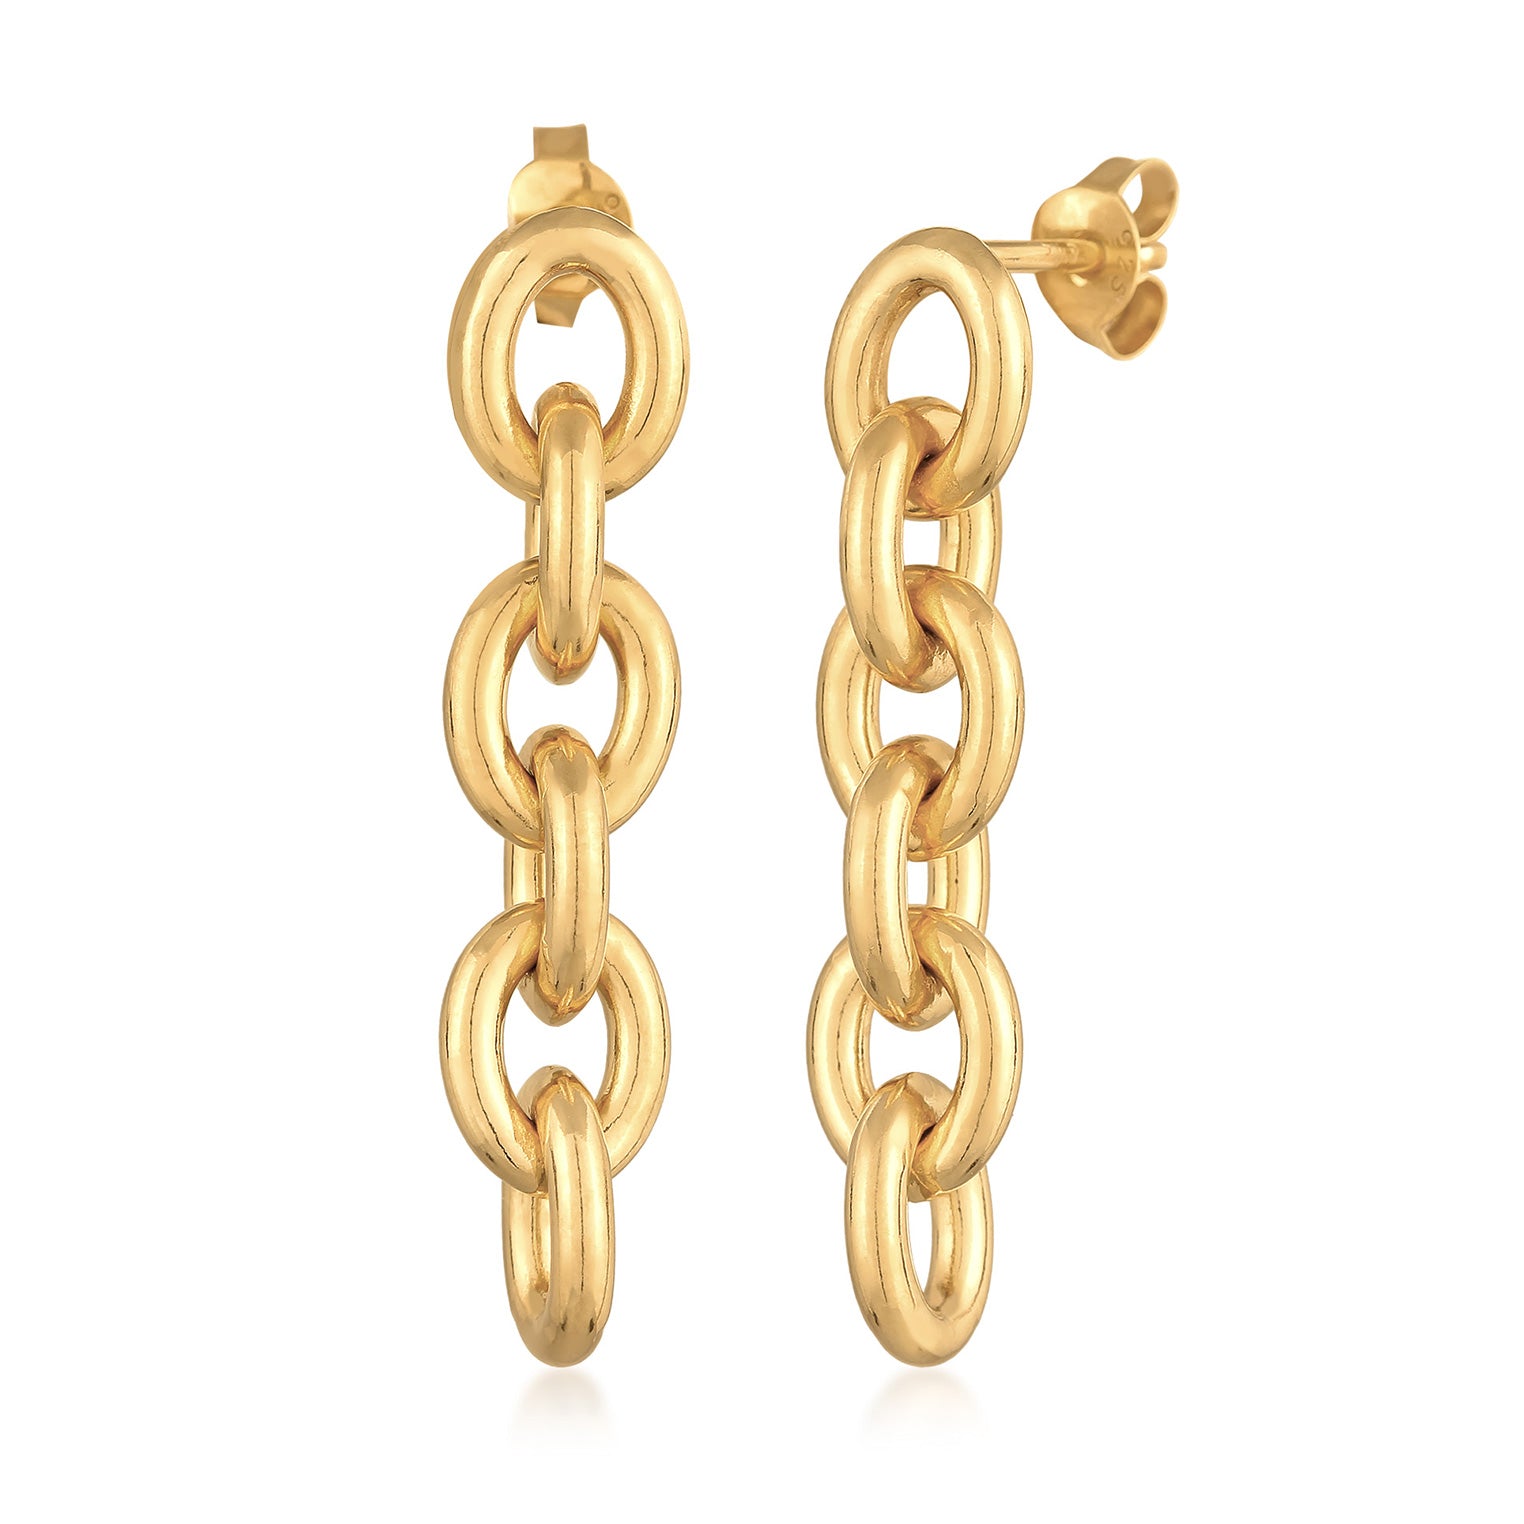 Elli online at Elli variations in – many | Earrings Jewelry